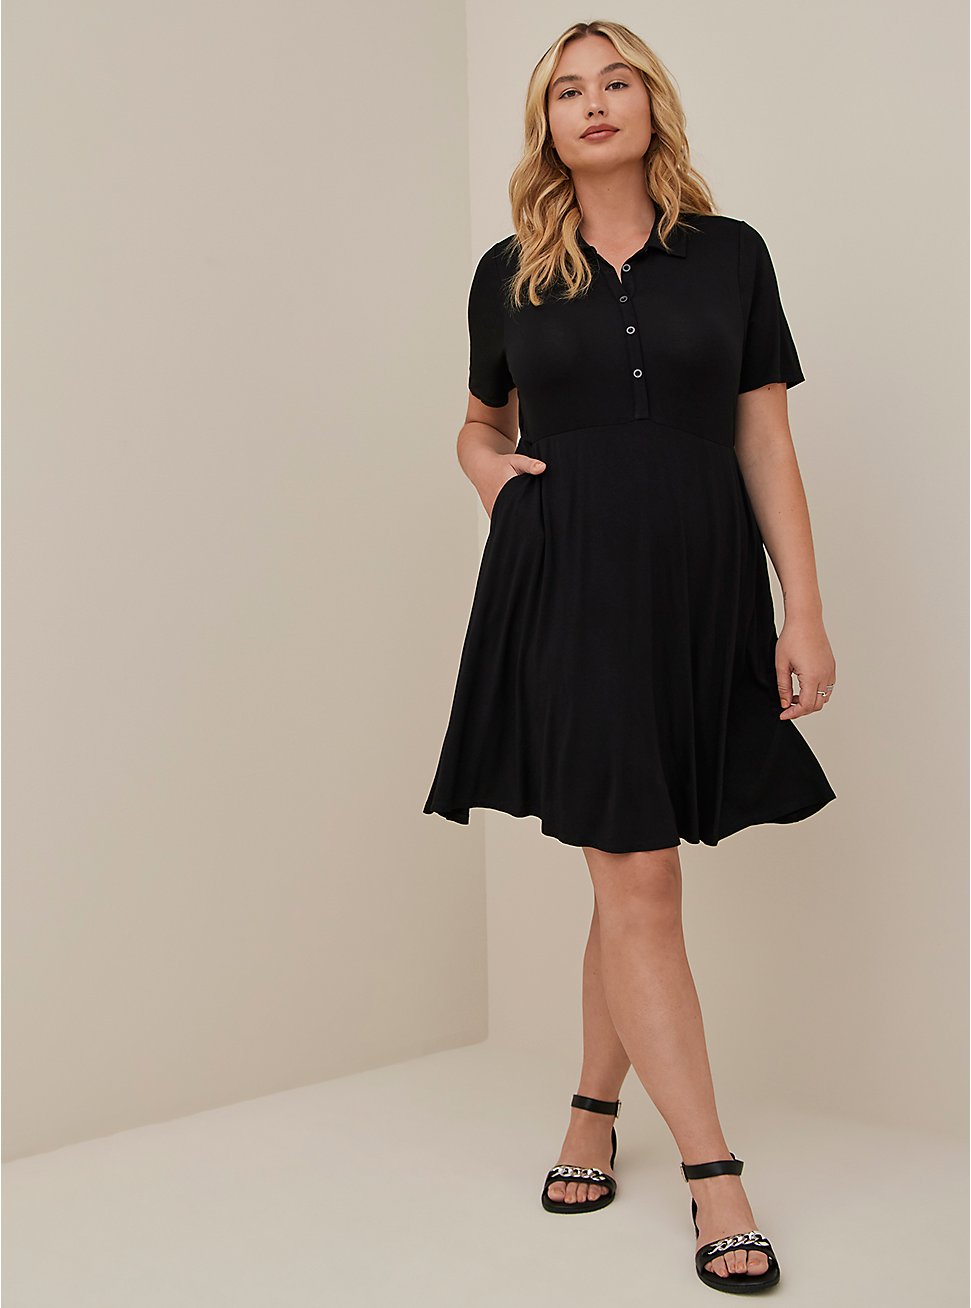 Plus Size Collared Shirt Dress - Jersey Black, DEEP BLACK, hi-res